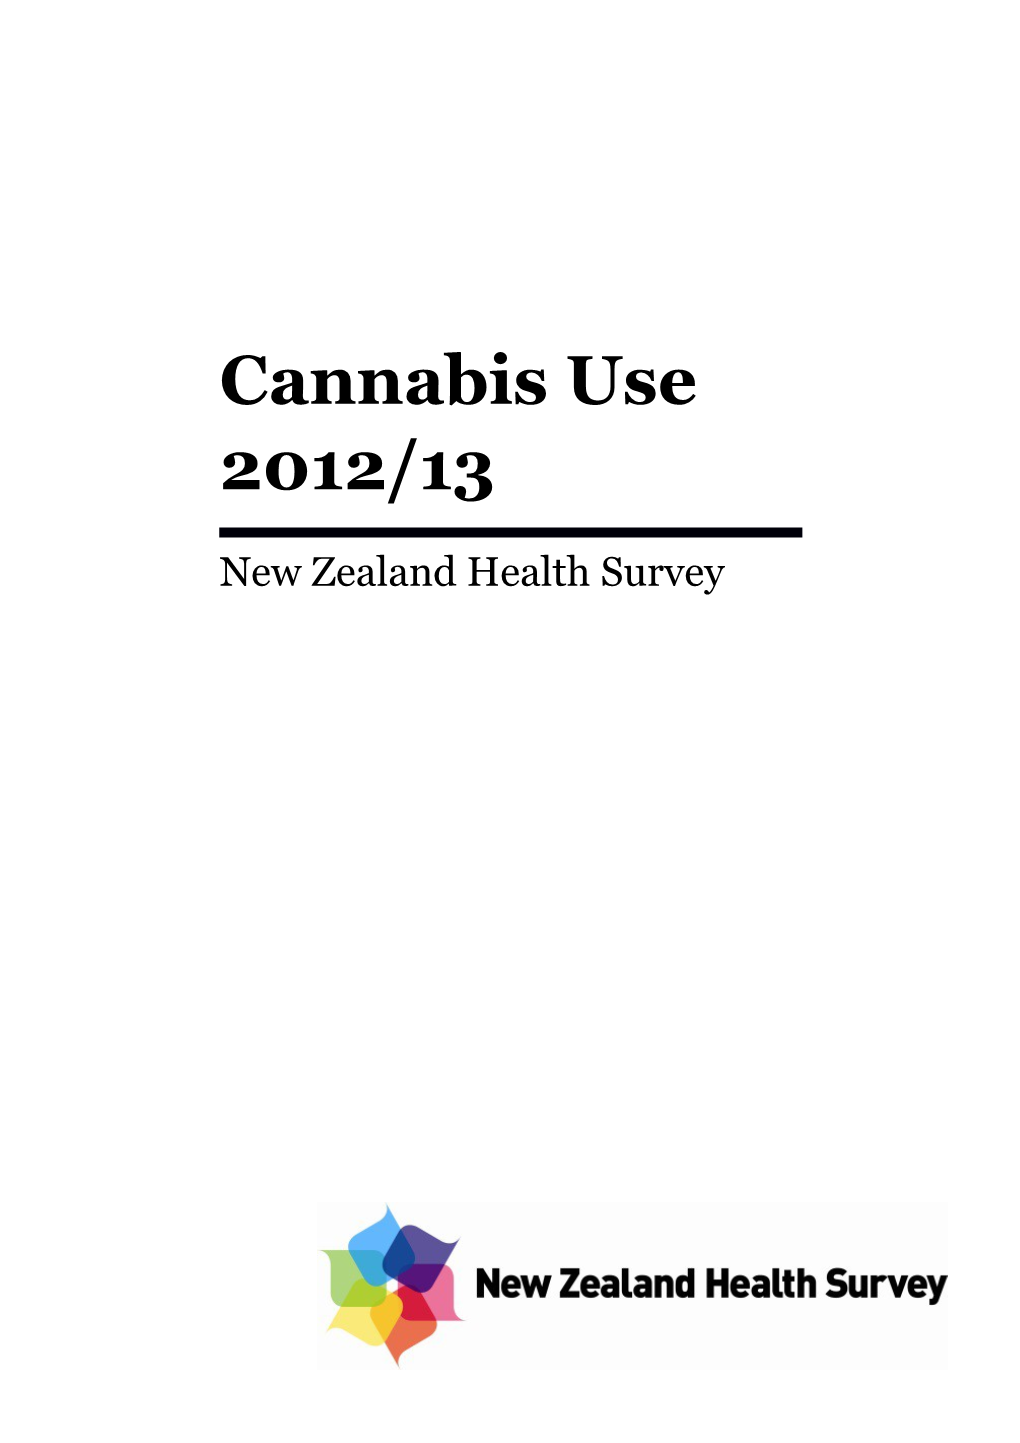 Cannabis Use 2012/13: New Zealand Health Survey